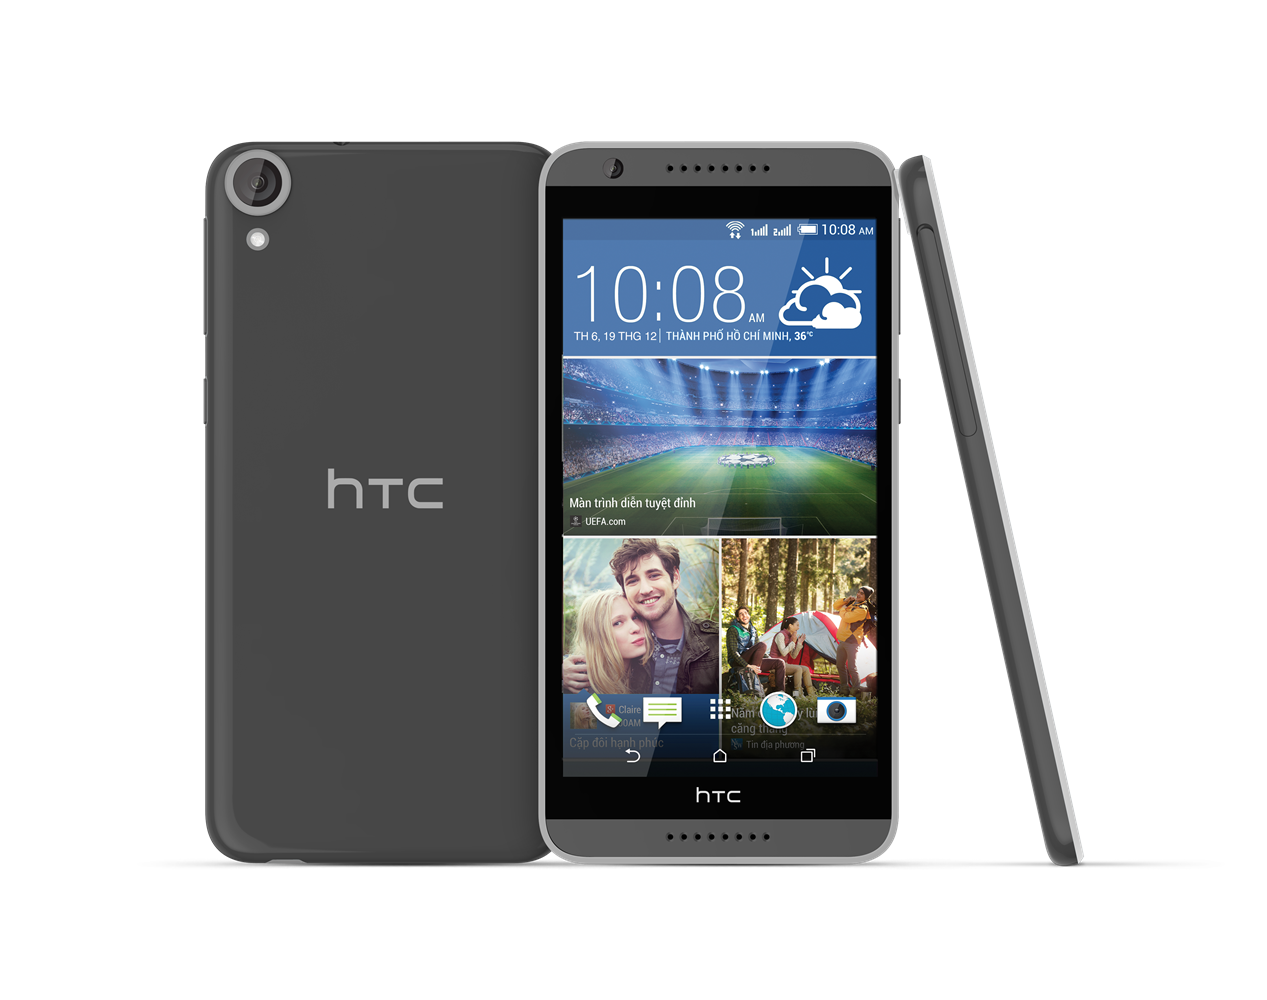 HTC Desire 820G+: Chip lõi 8, loa Boomsound, màn 5,5 inch, giá 4 triệu đồng